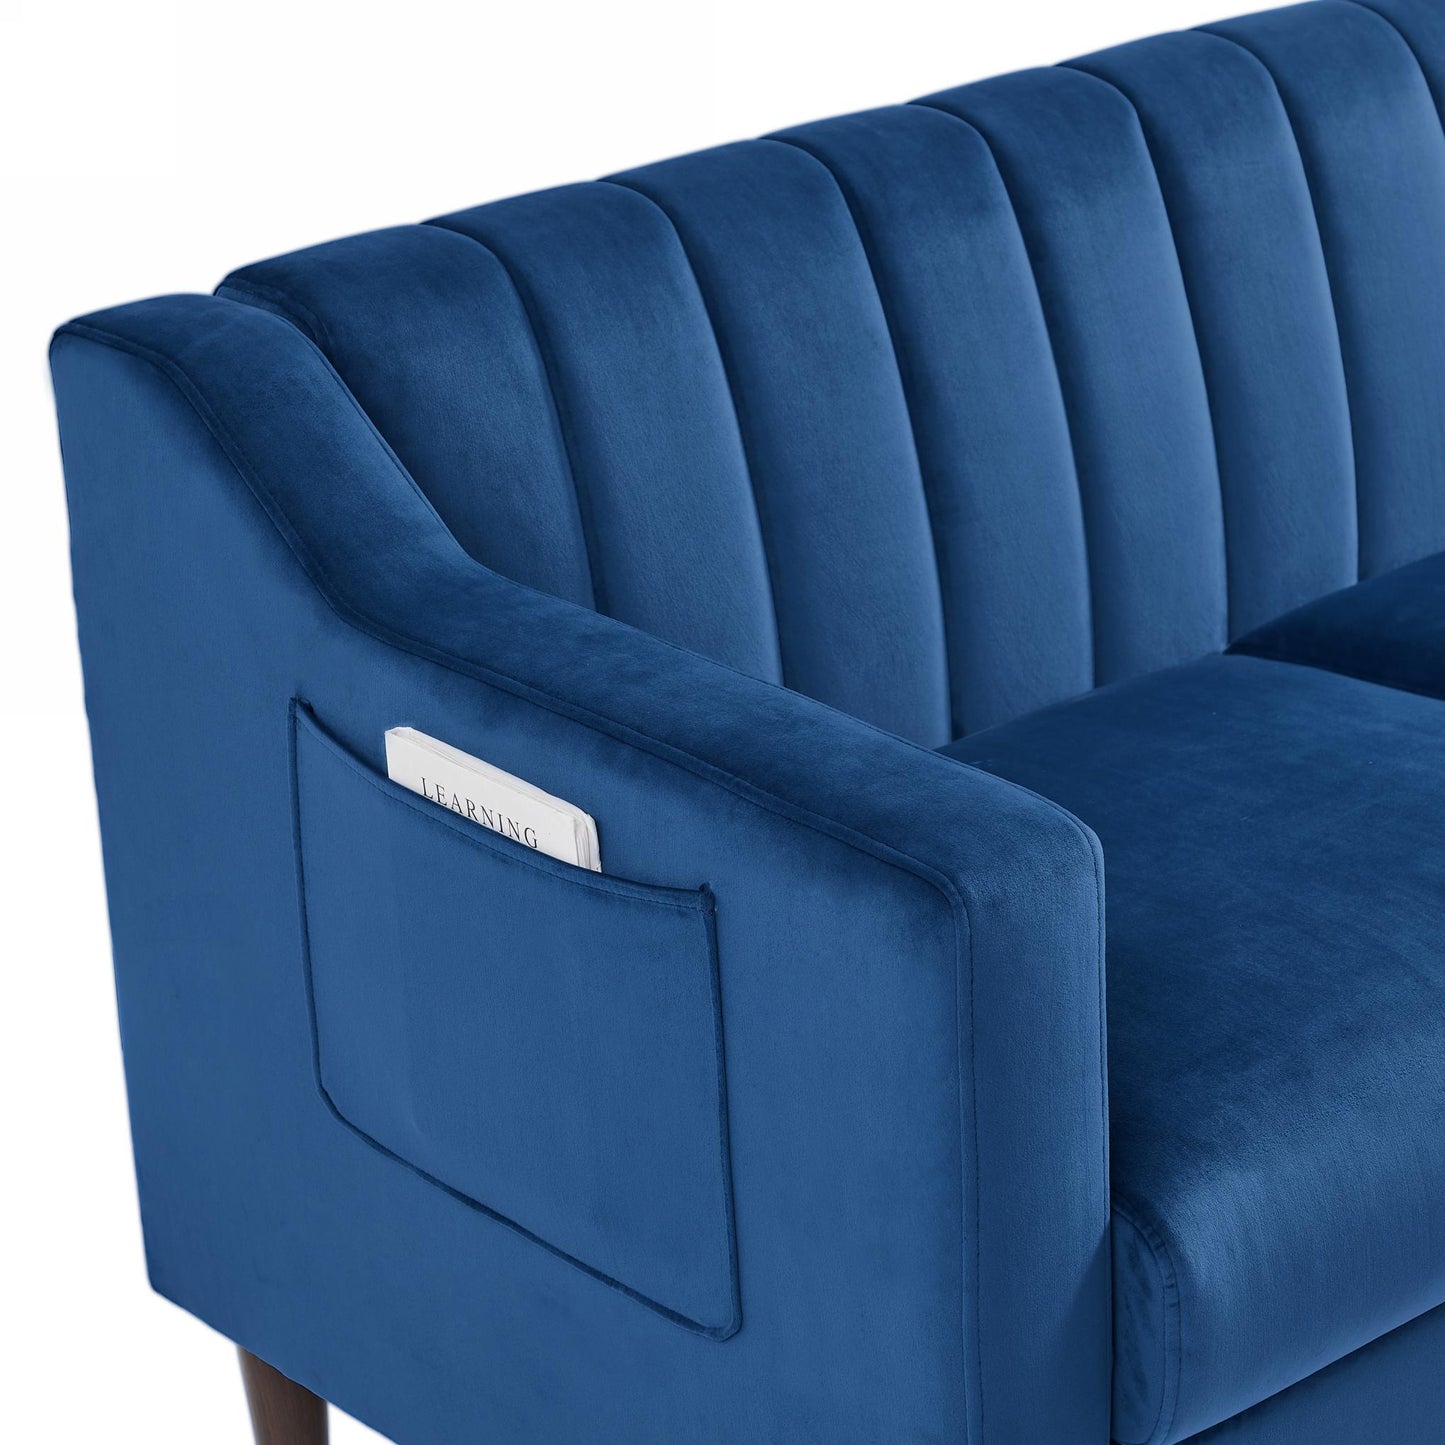 Modern Chesterfield Sofa with Velvet Upholstery and Wooden Frame